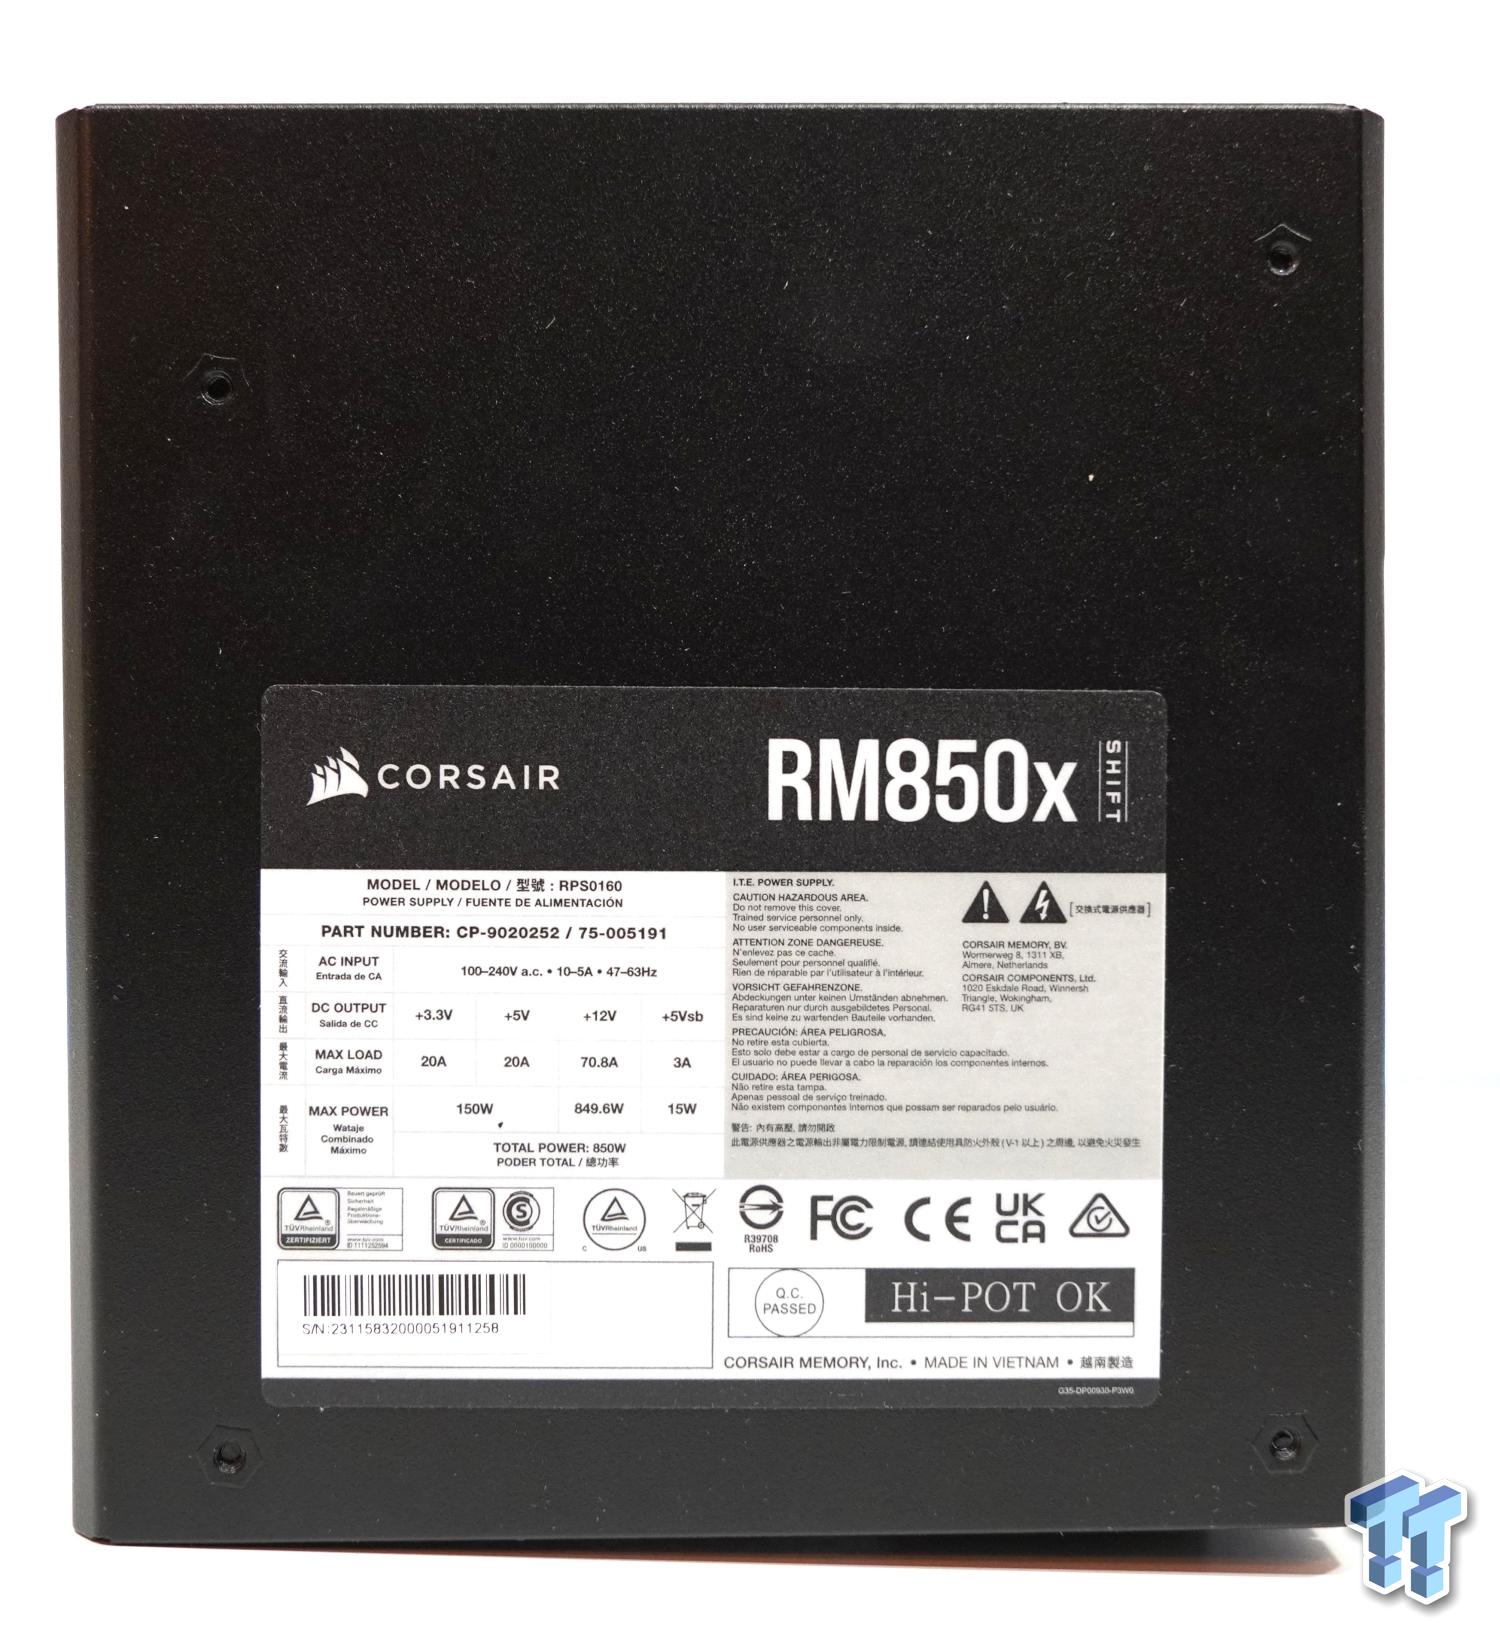  Corsair RM850x SHIFT Fully Modular ATX Power Supply